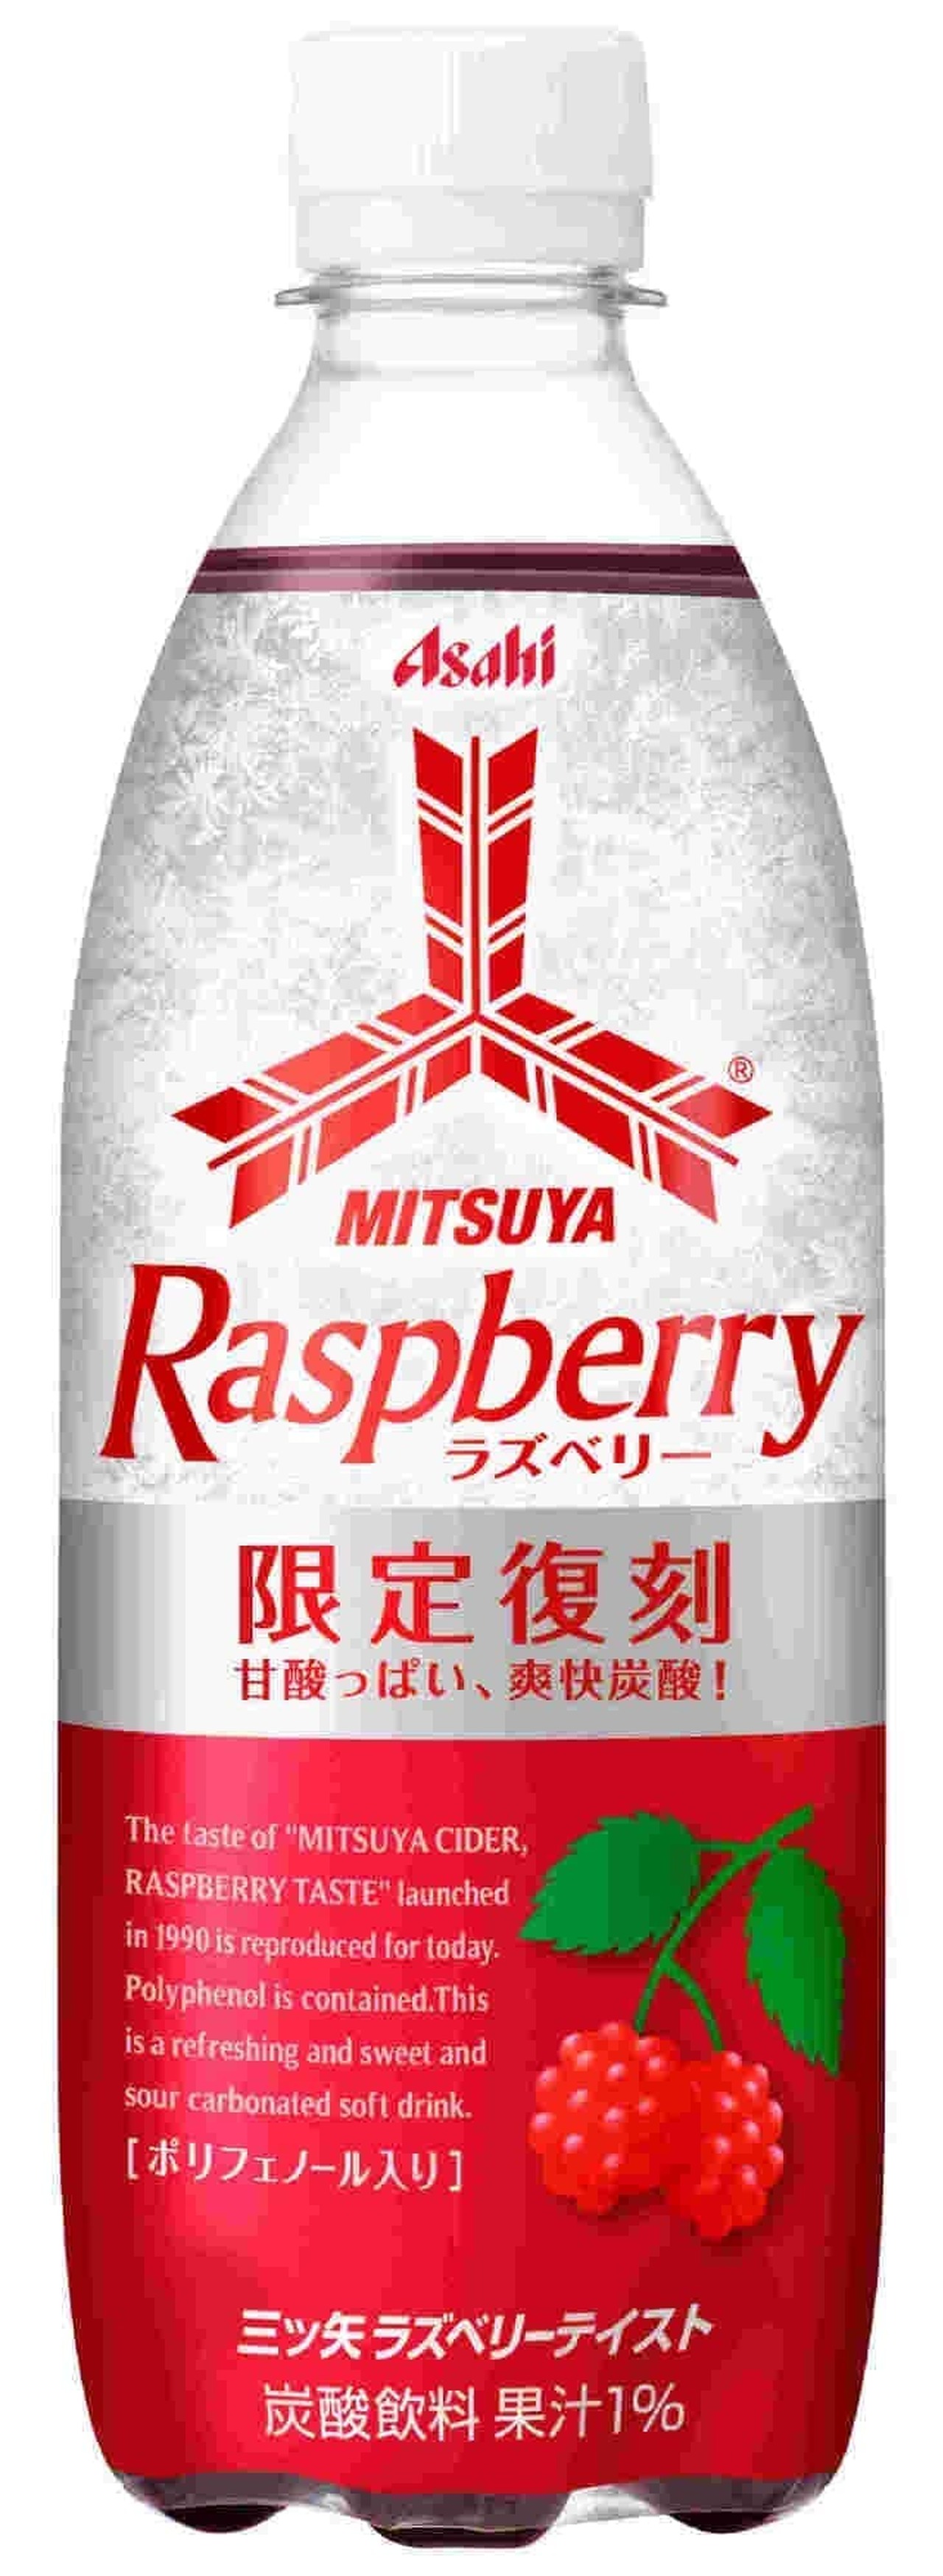 Asahi Soft Drinks "Mitsuya Raspberry Taste"